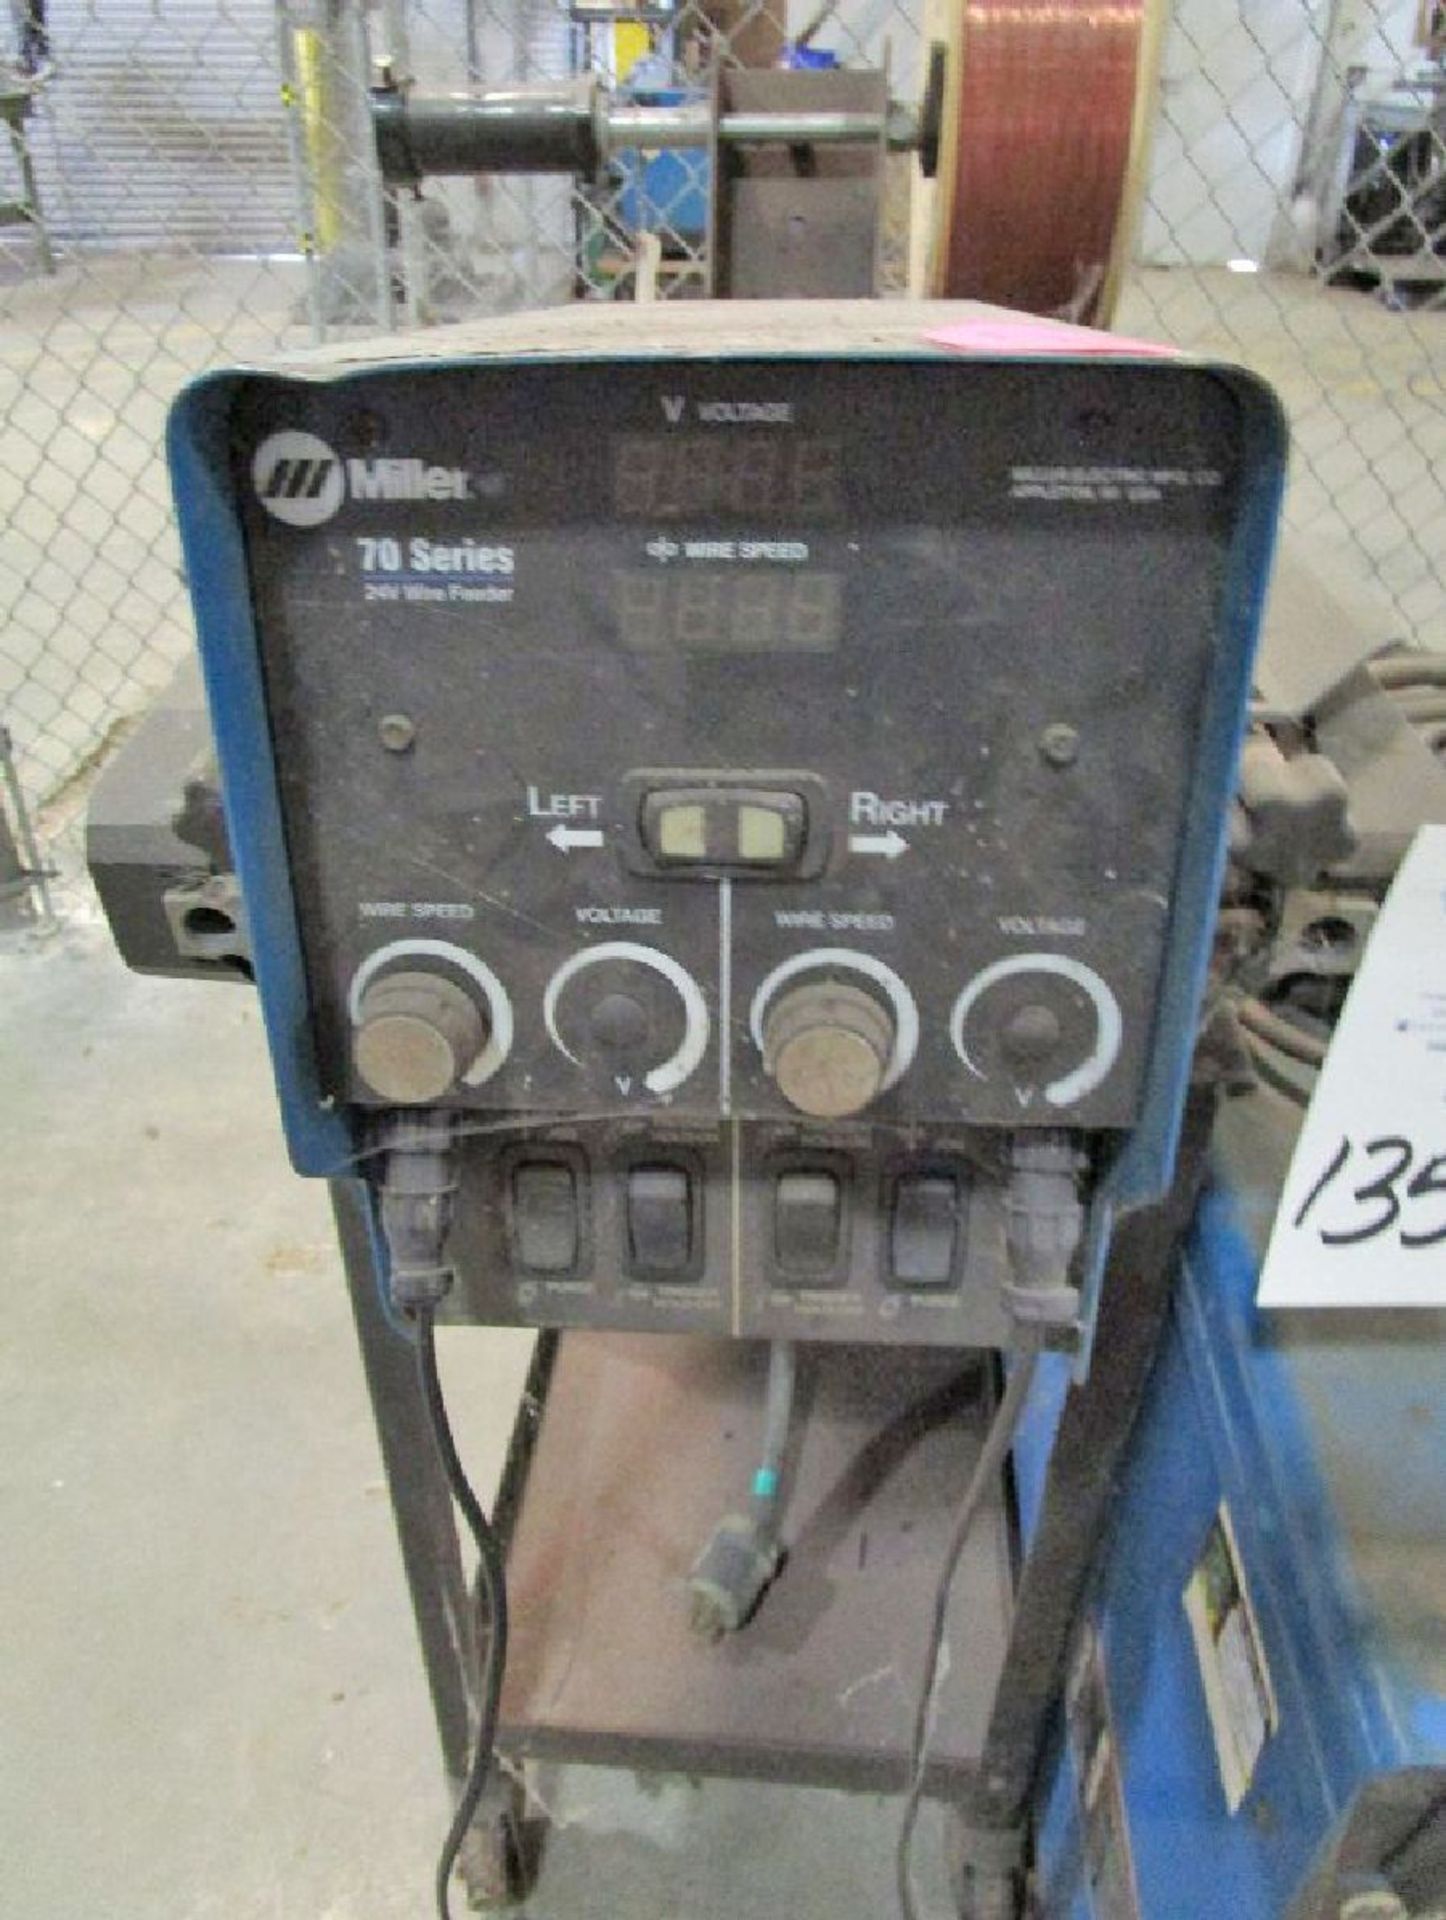 Miller Model Dimention 452 Welding Power Source - Image 4 of 6